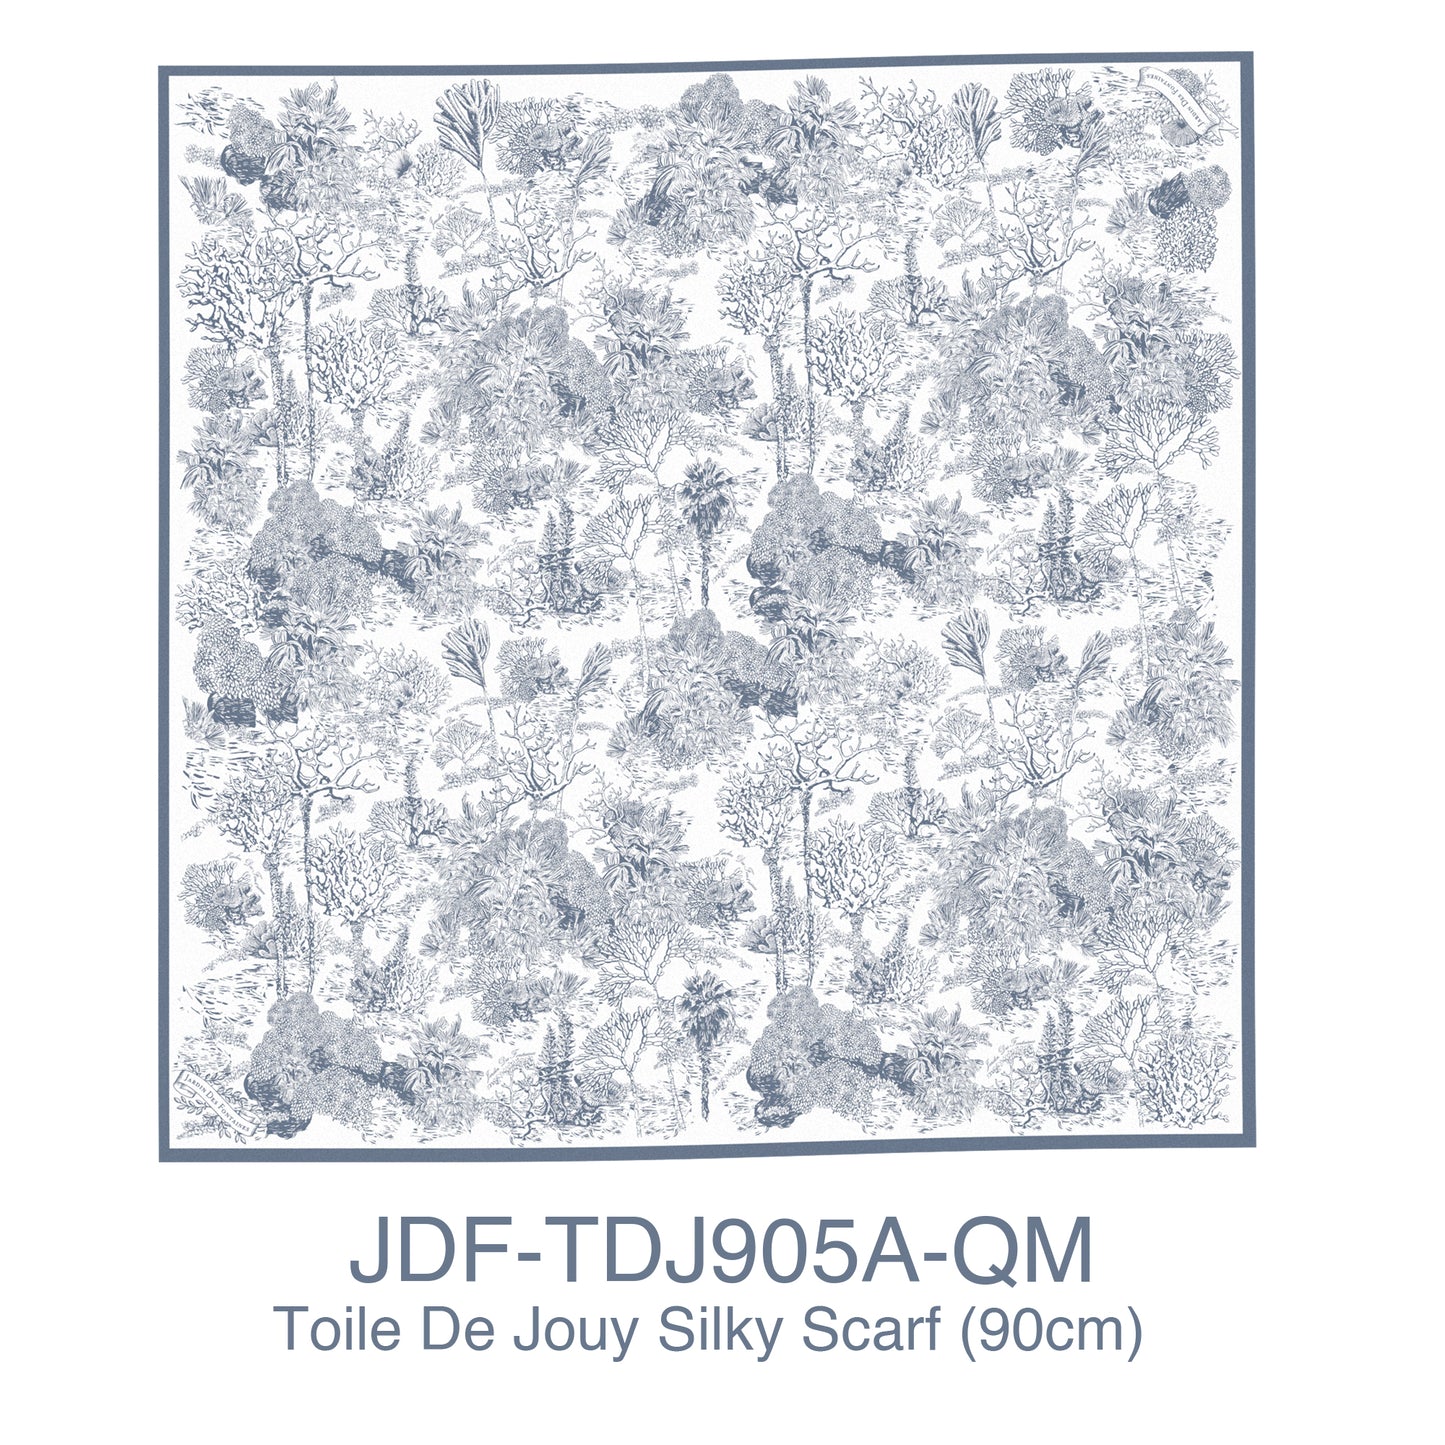 "Toile De Jouy" 90cm Silky Scarf